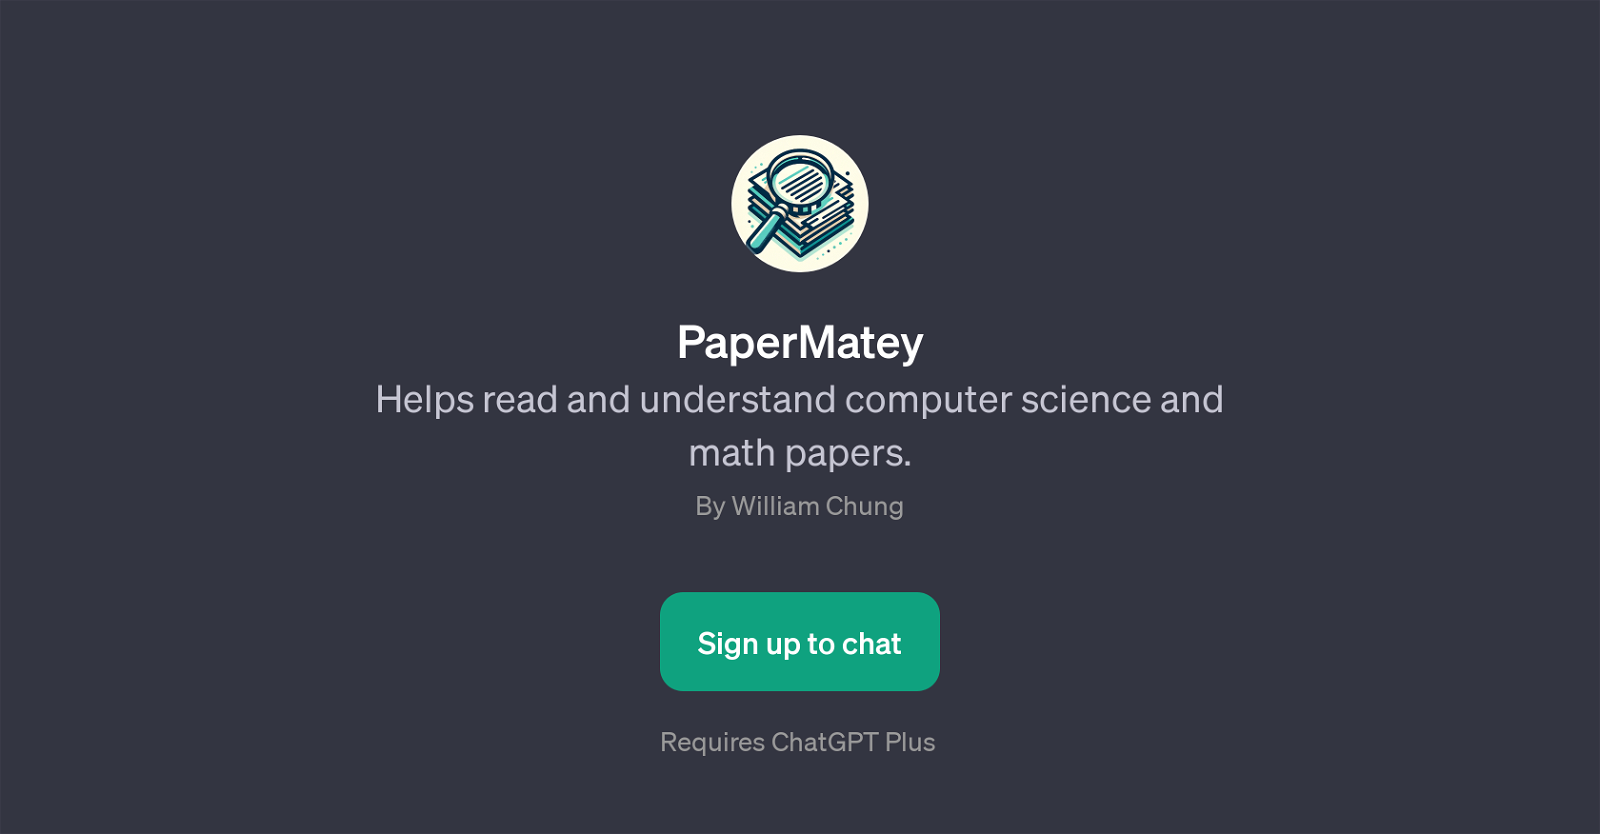 PaperMatey website